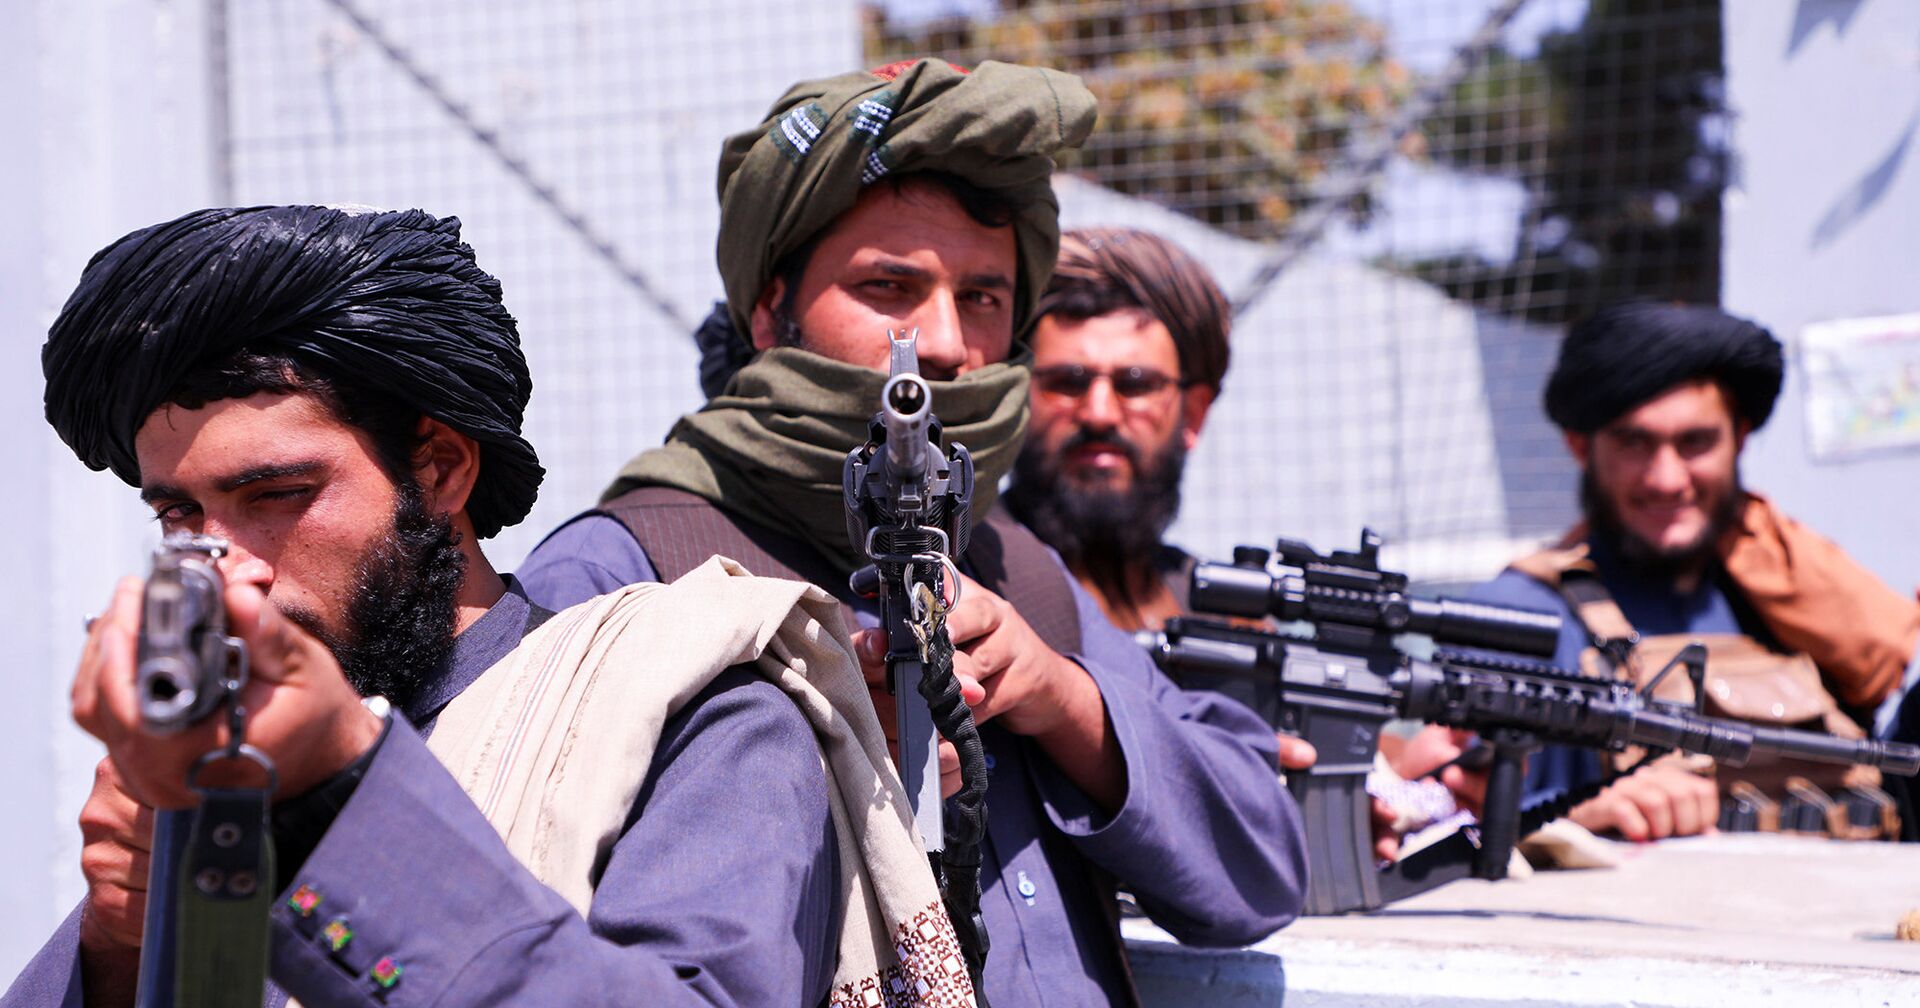 Боевики Талибана (запрещена в РФ) в Кабуле, Афганистан - ИноСМИ, 1920, 07.09.2021